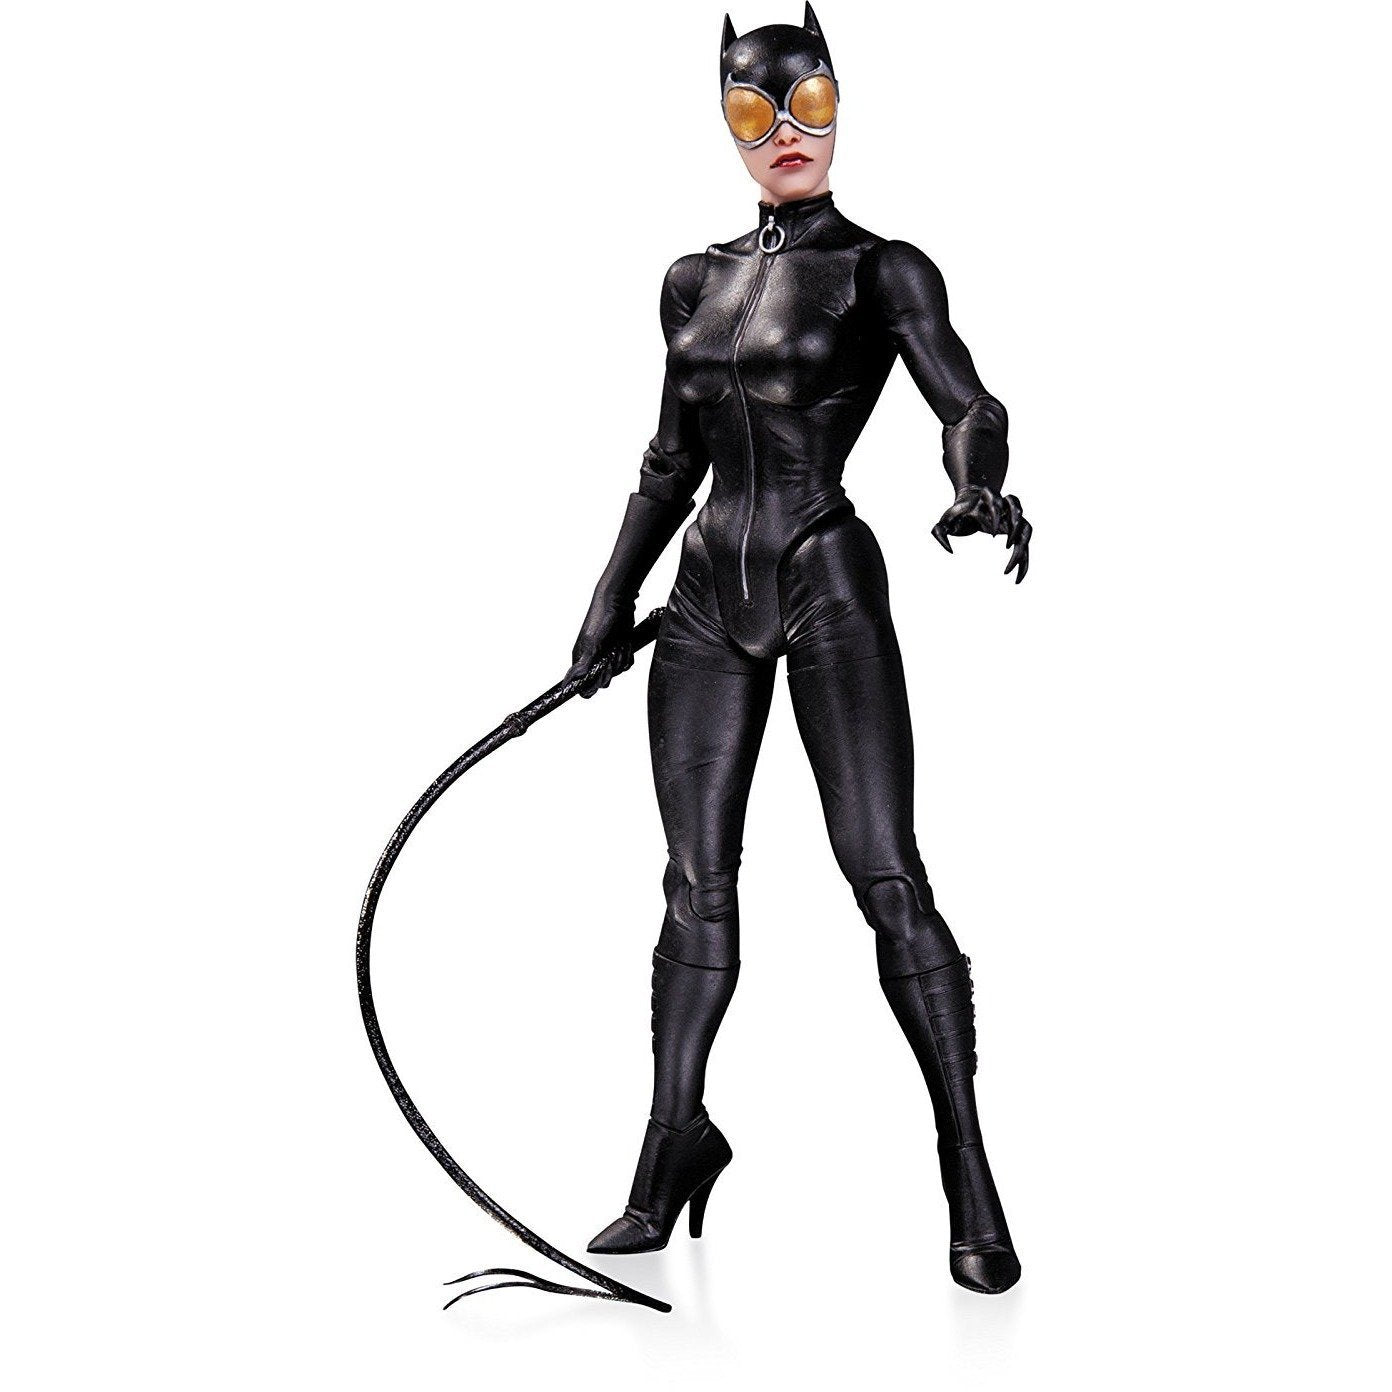 DC Collectibles DC Comics Designer Action Figures Series 2: Catwoman Figure by Greg Capullo - Nerd Arena